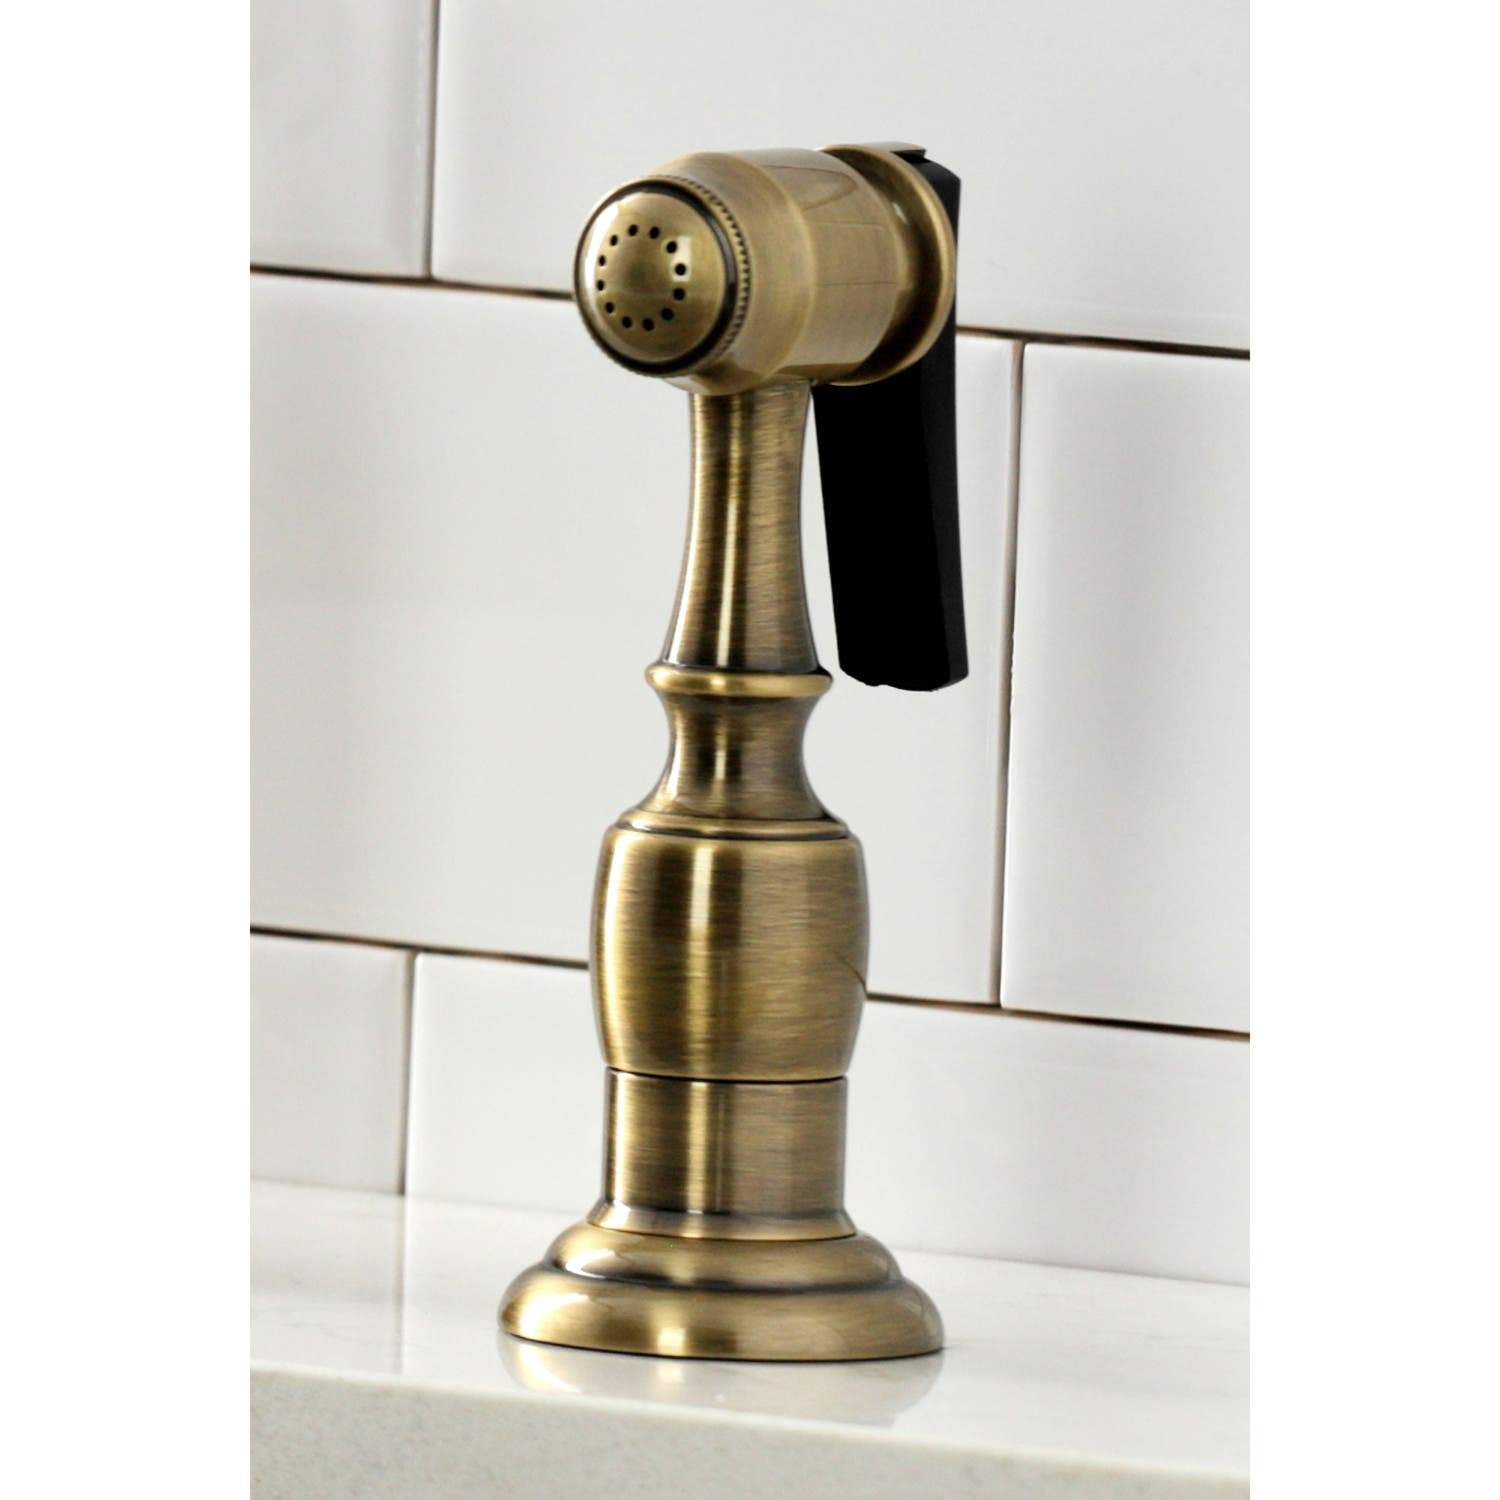 Kingston Brass KS127XPKLBS-P Duchess Bridge Kitchen Faucet with Brass Sprayer